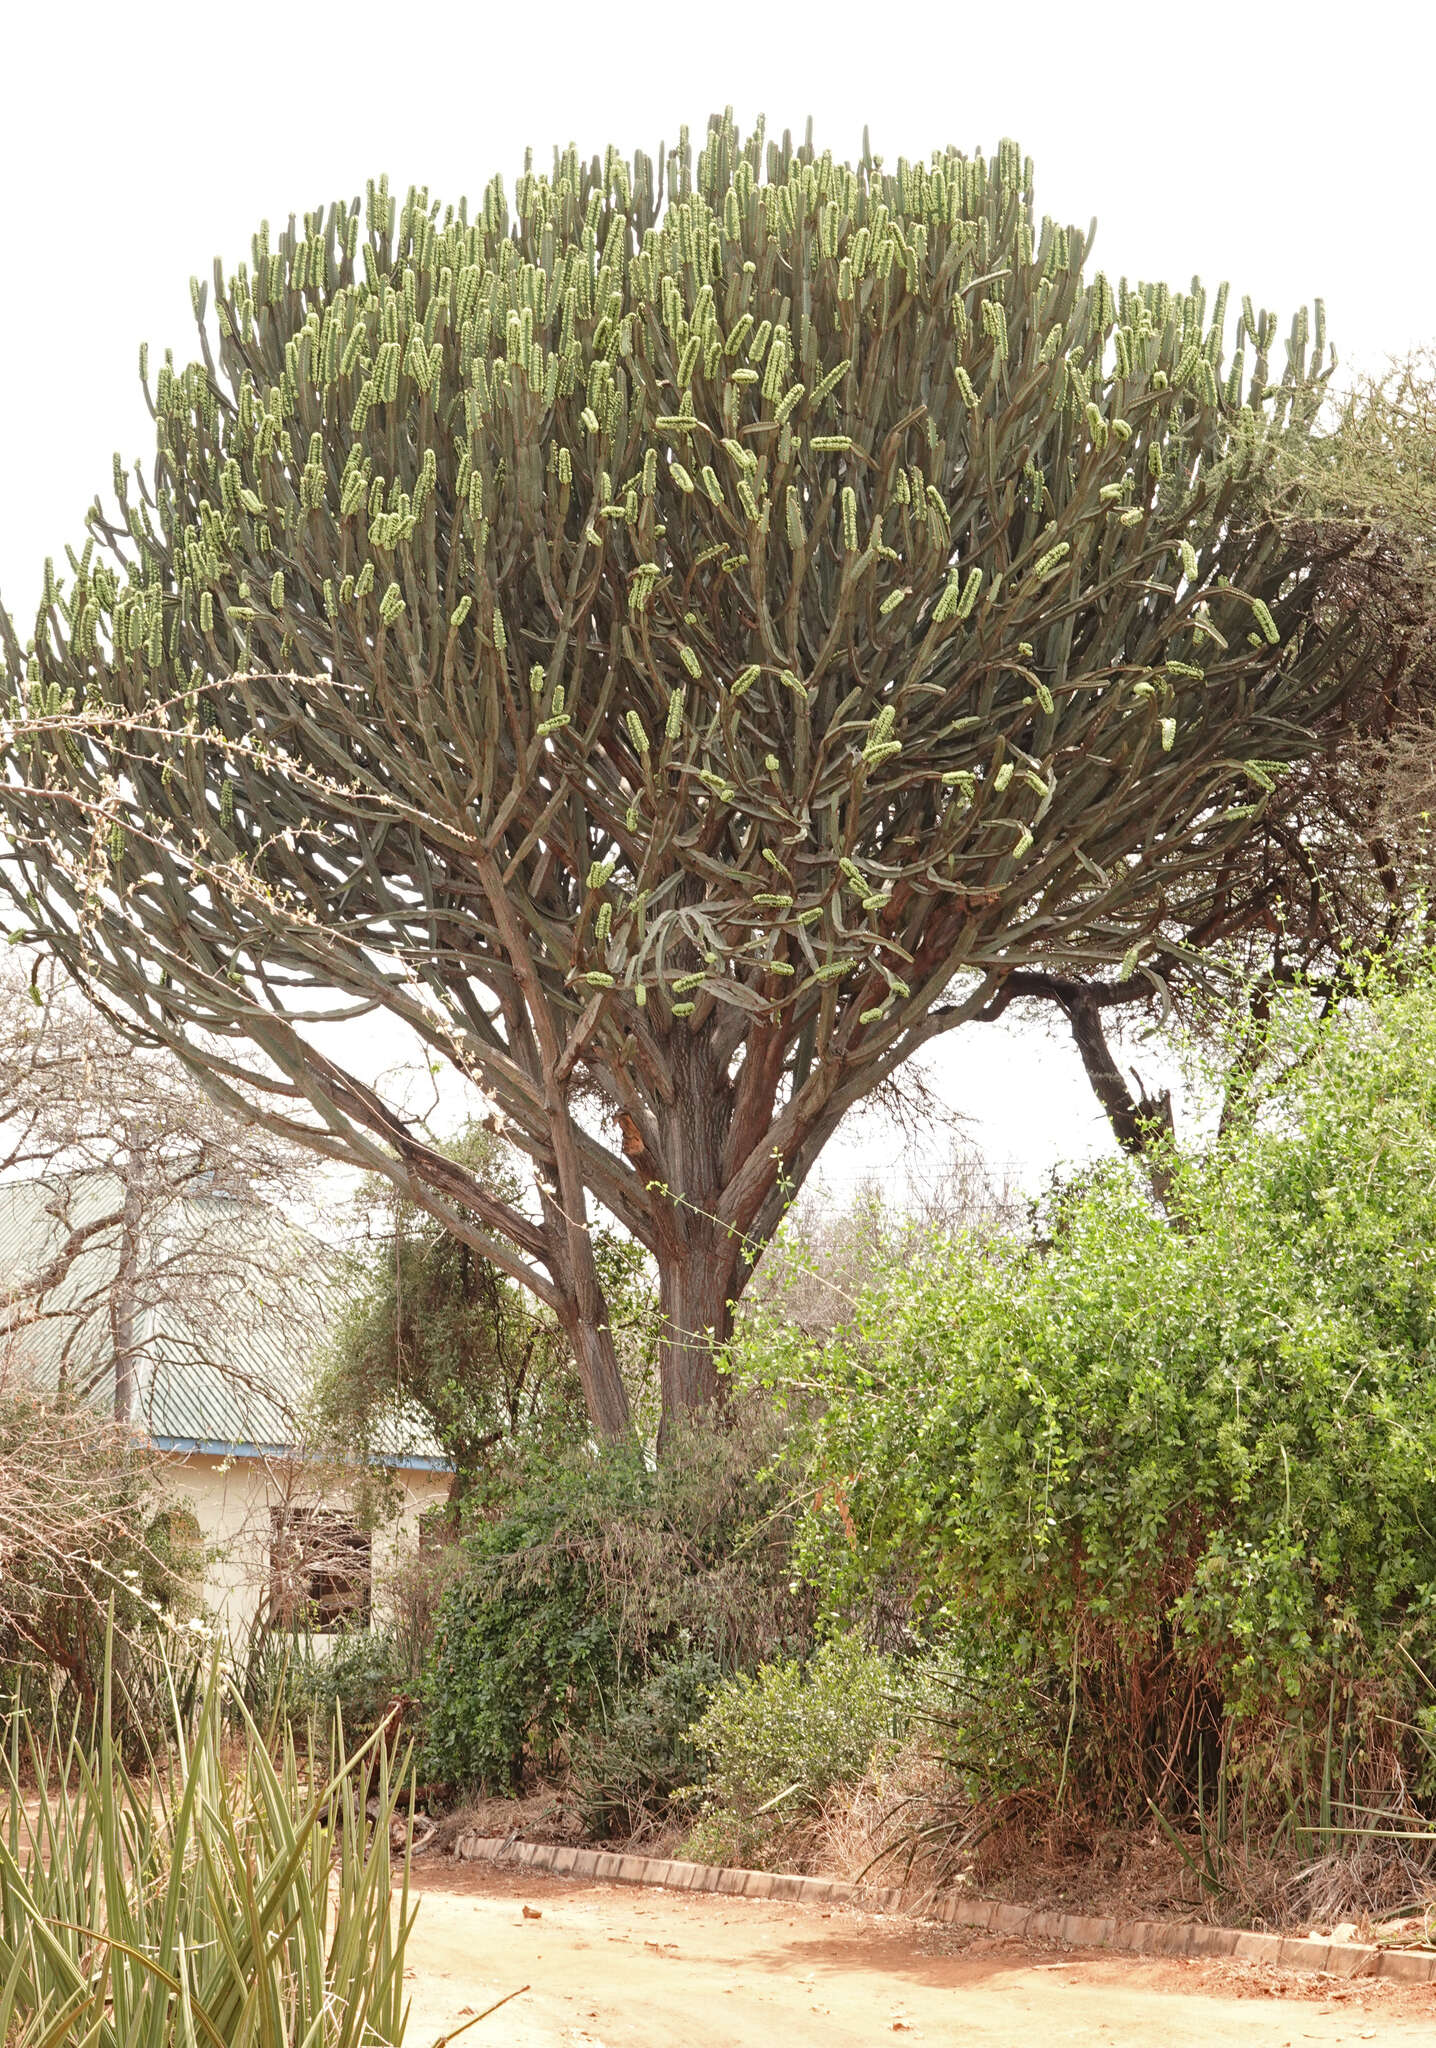 Image of Candelabra tree